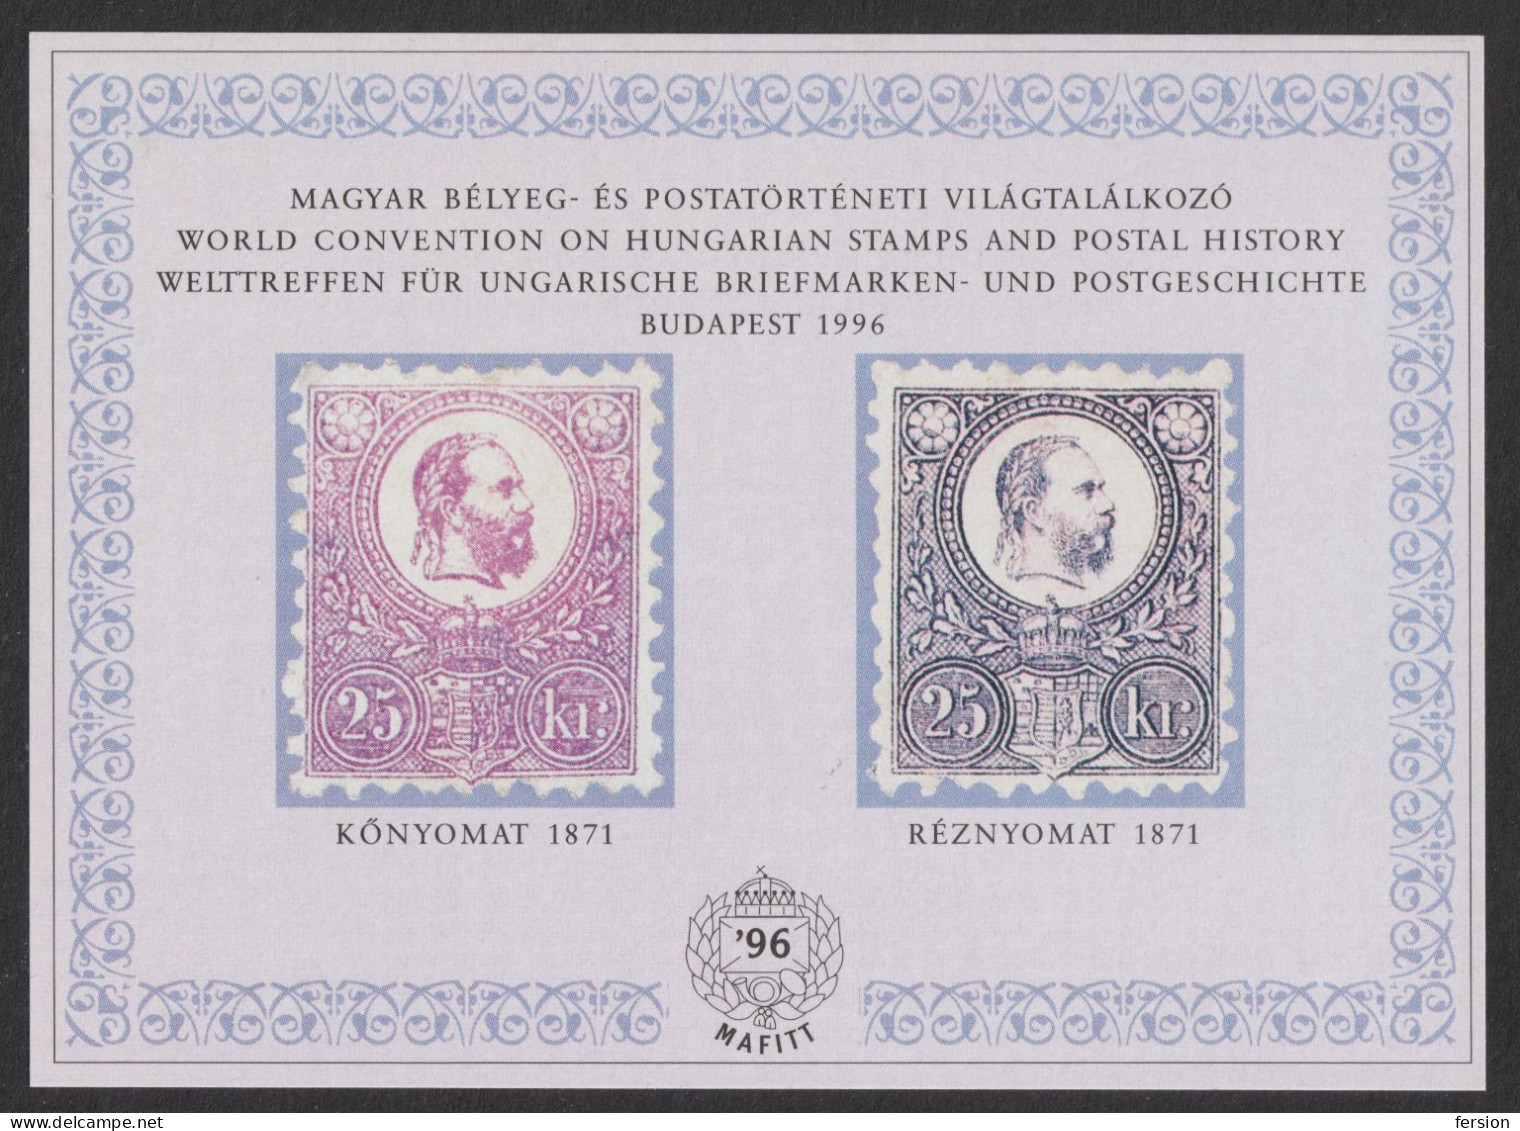 Stamp On Stamp 1871 Reprint Lithography Engraved Commemorative Memorial Sheet MAFITT STAMP 1996 Hungary FRANZ JOSEPH - Feuillets Souvenir